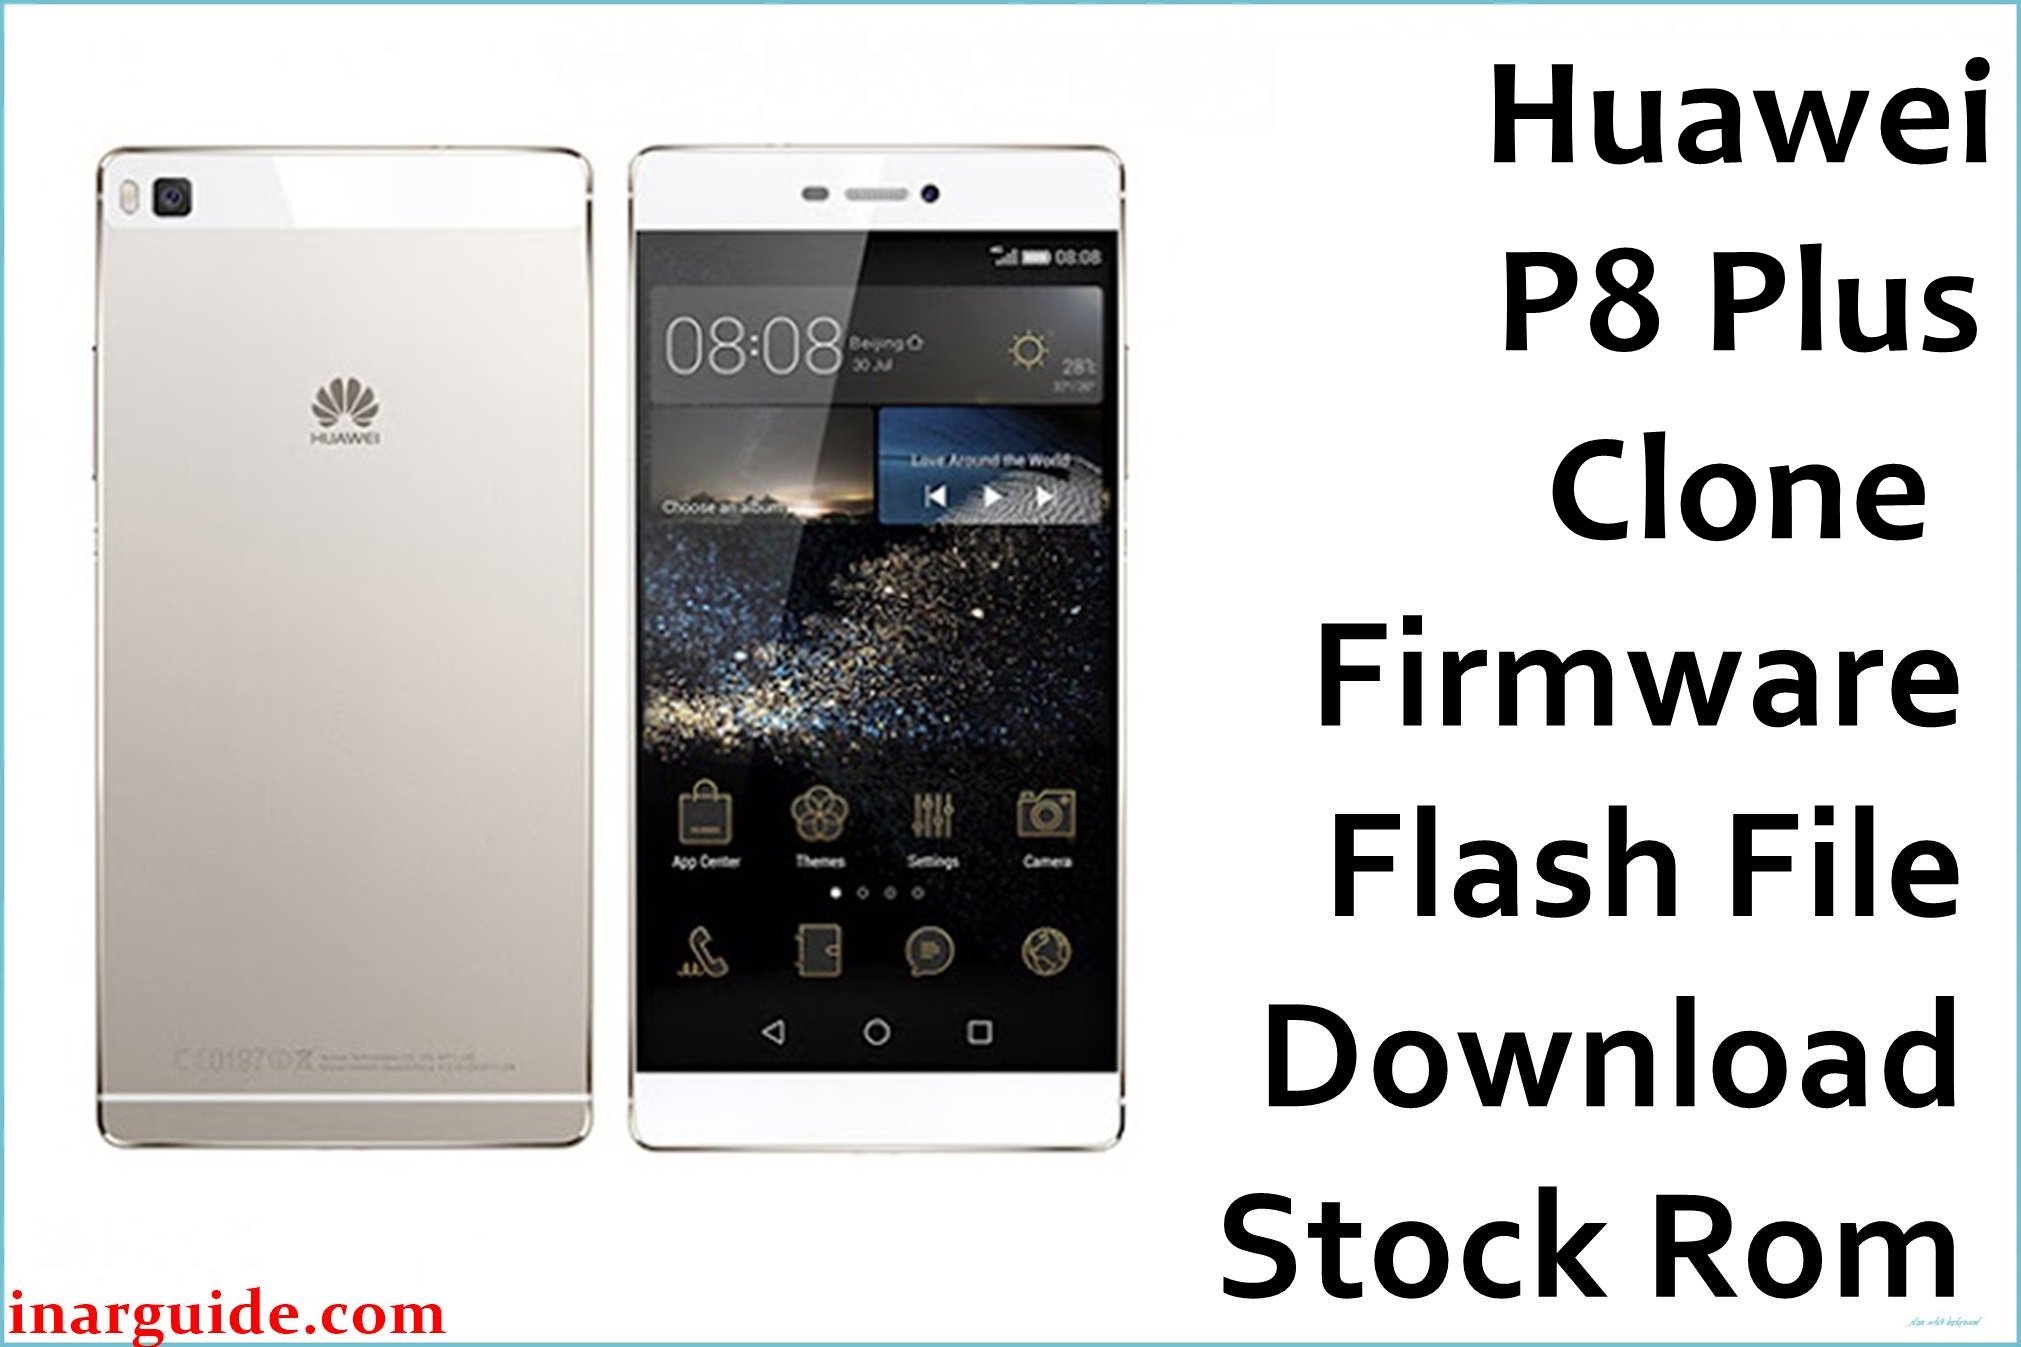 Huawei P8 Plus Clone